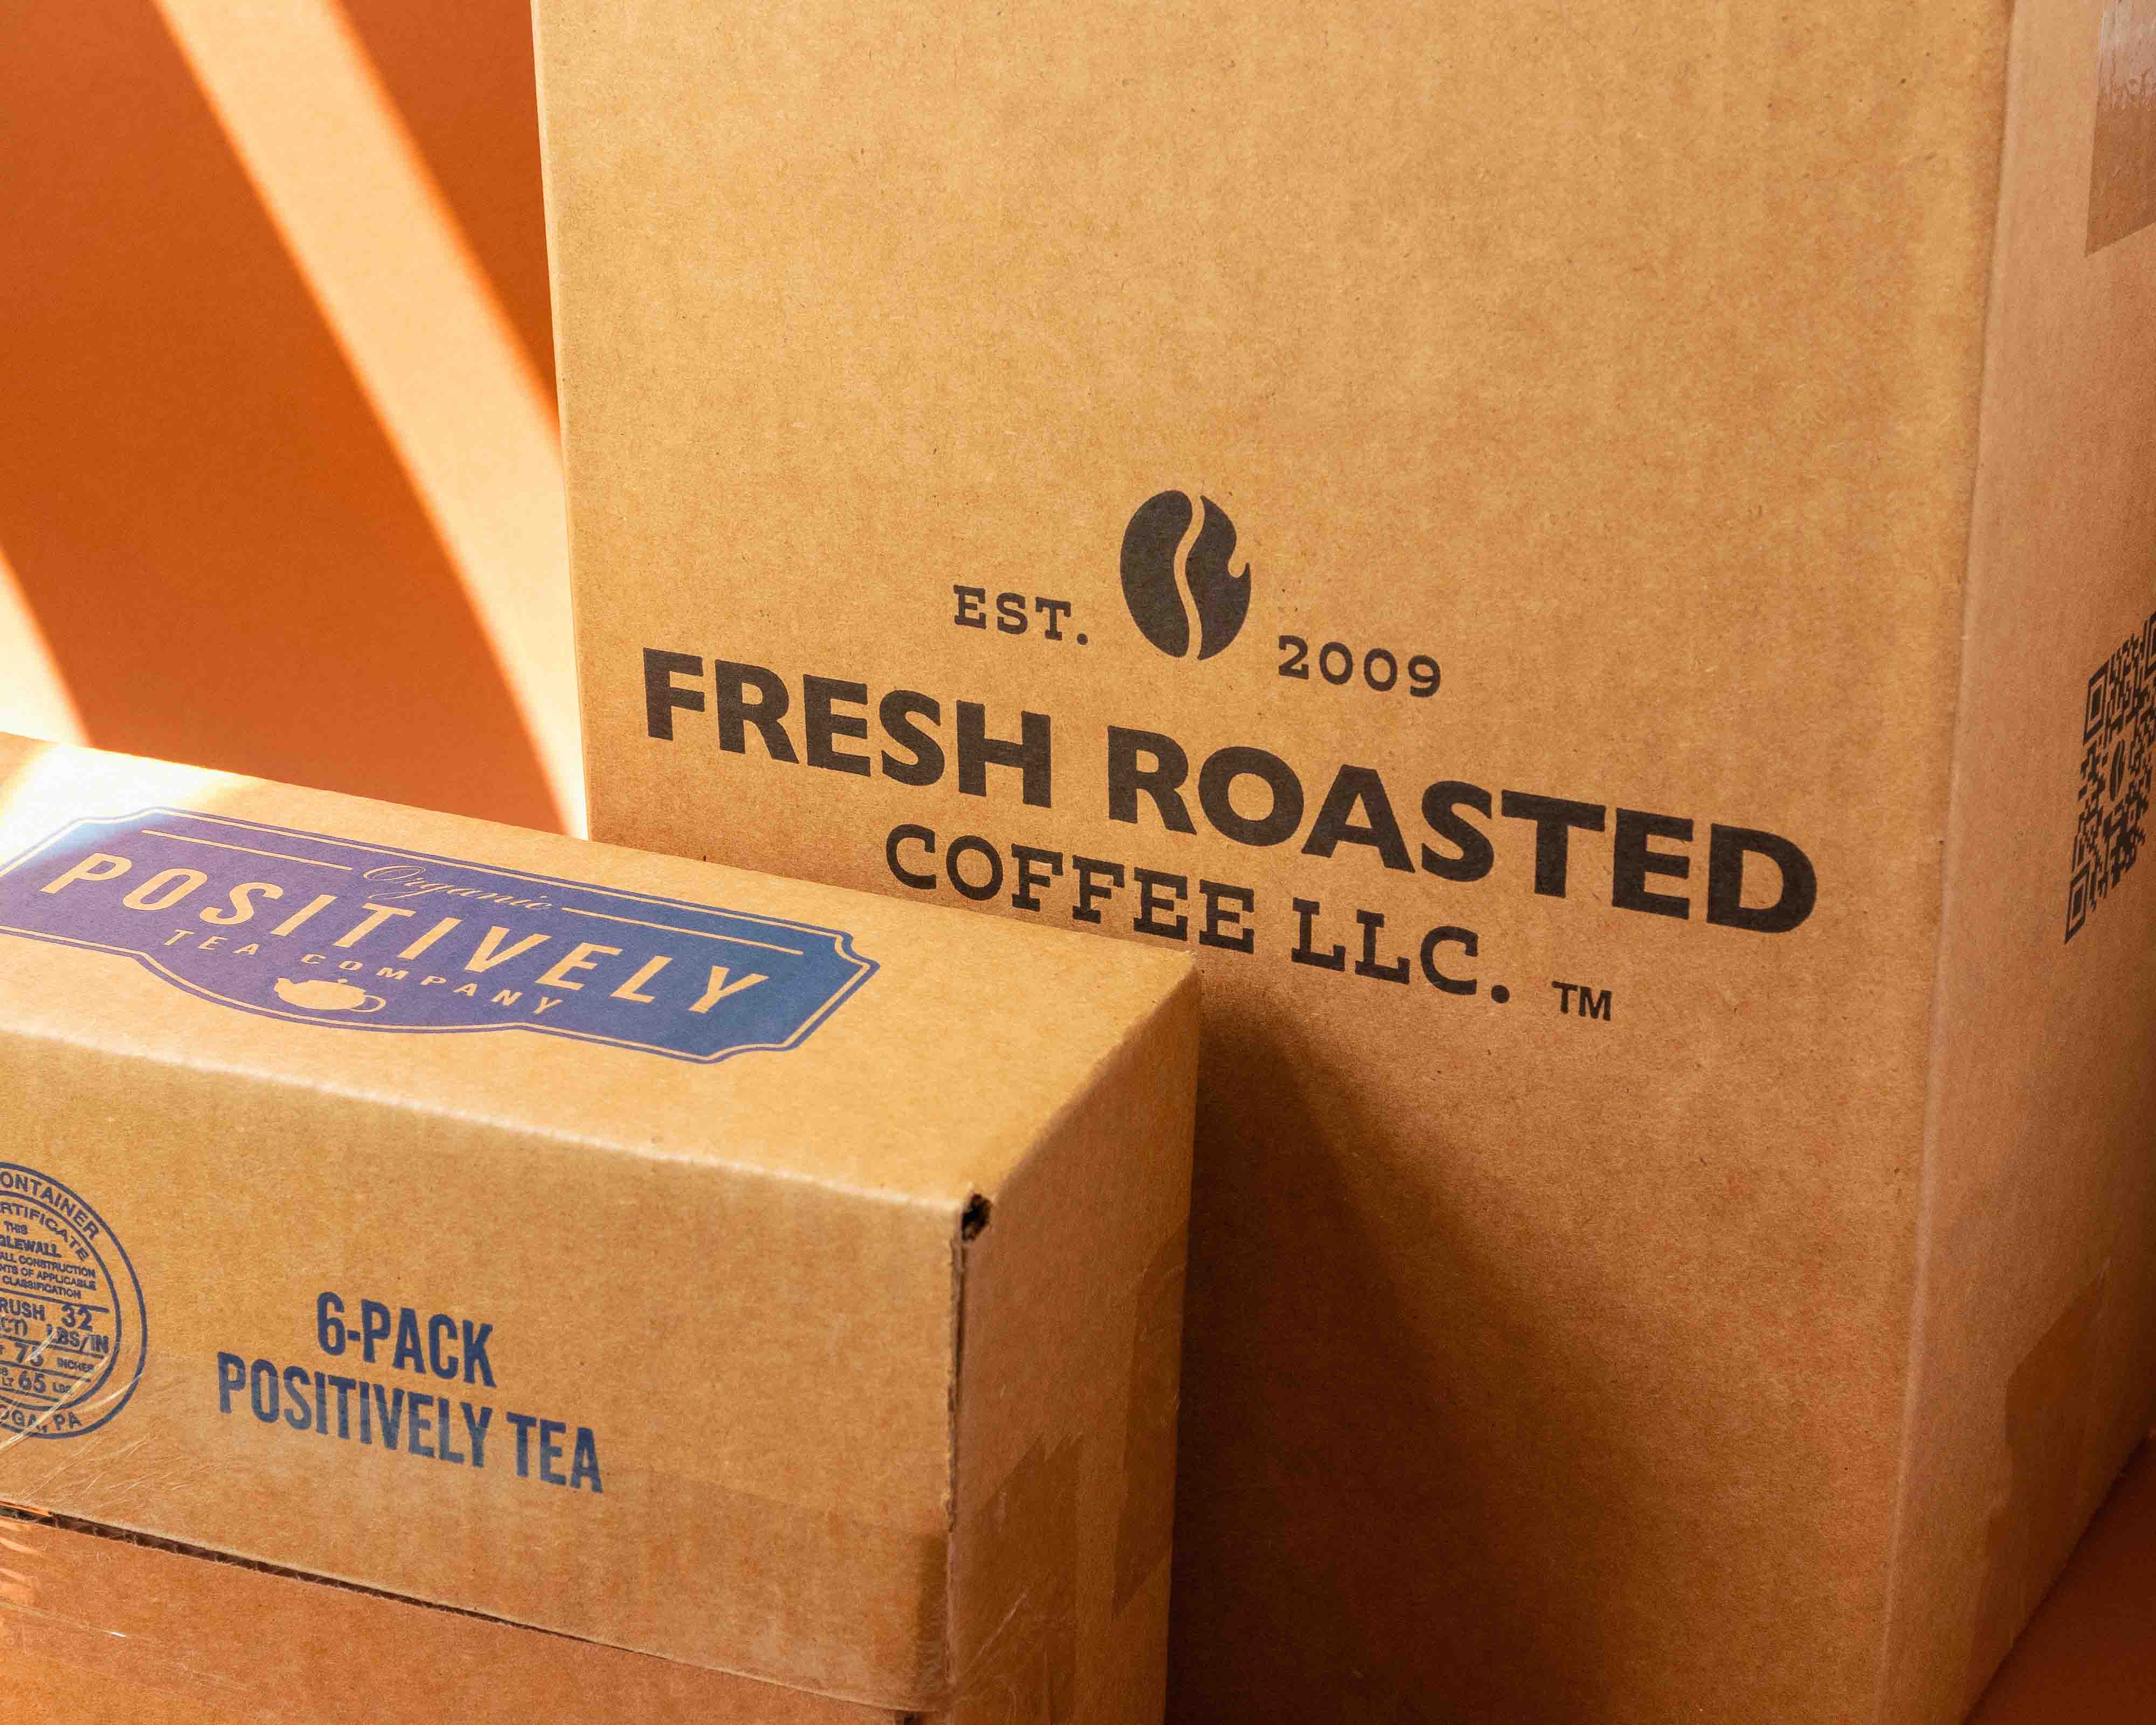 Cardboard box with Fresh Roasted Coffee logo and cardboard box with Positively Tea logo